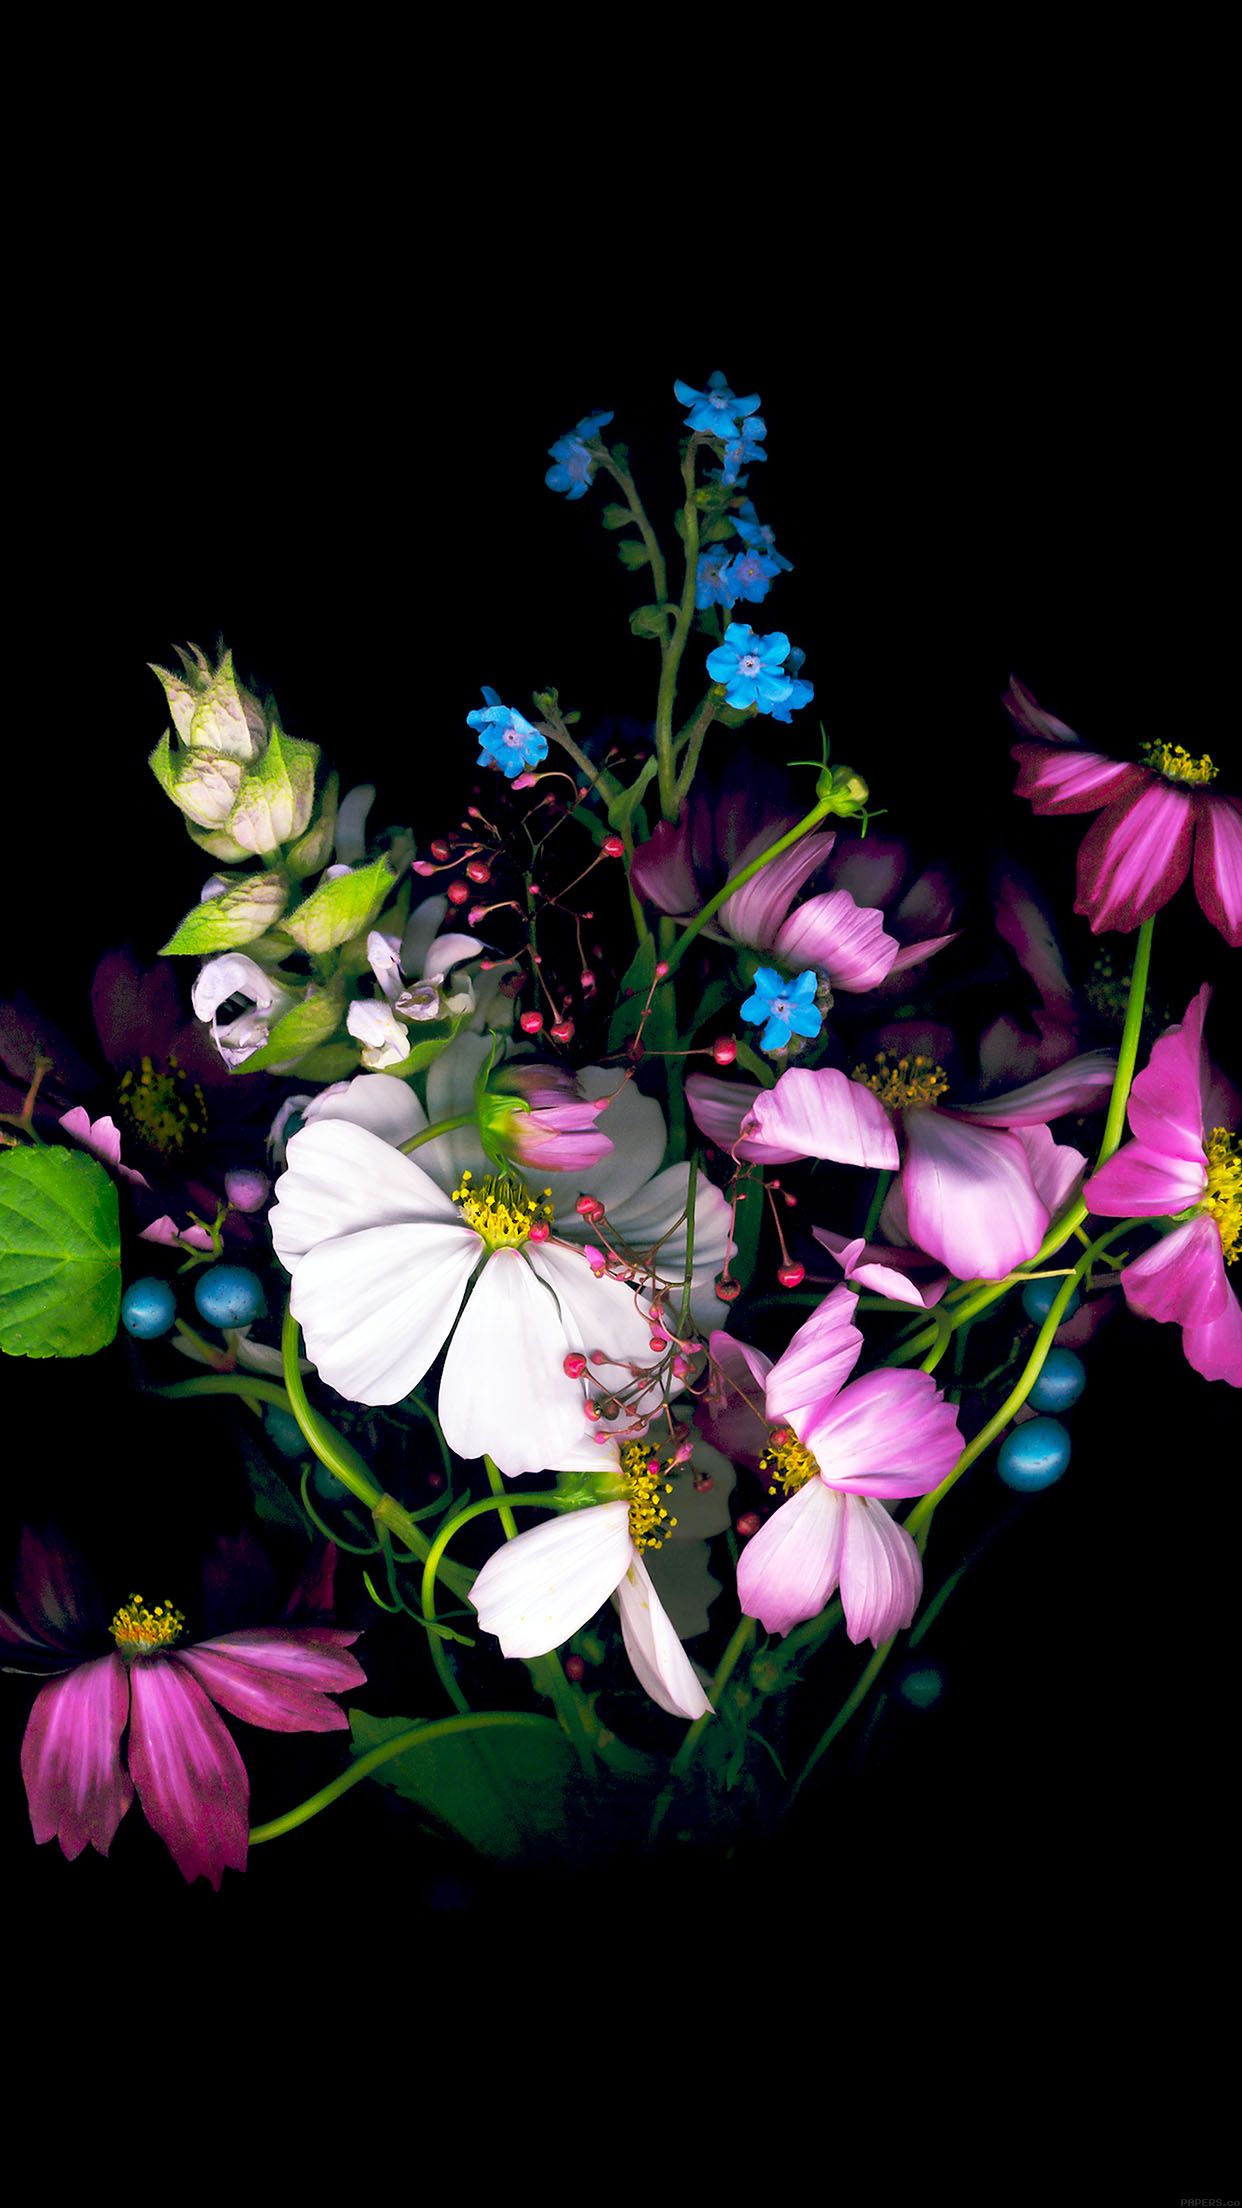 Free download Flower iPhone wallpaper HD floral Photography lockscreen 4k  images [736x1308] for your Desktop, Mobile & Tablet | Explore 51+ 4k  Lockscreen IPhone Wallpapers | iPhone 6 Blueprint Wallpaper Lockscreen,  iPhone